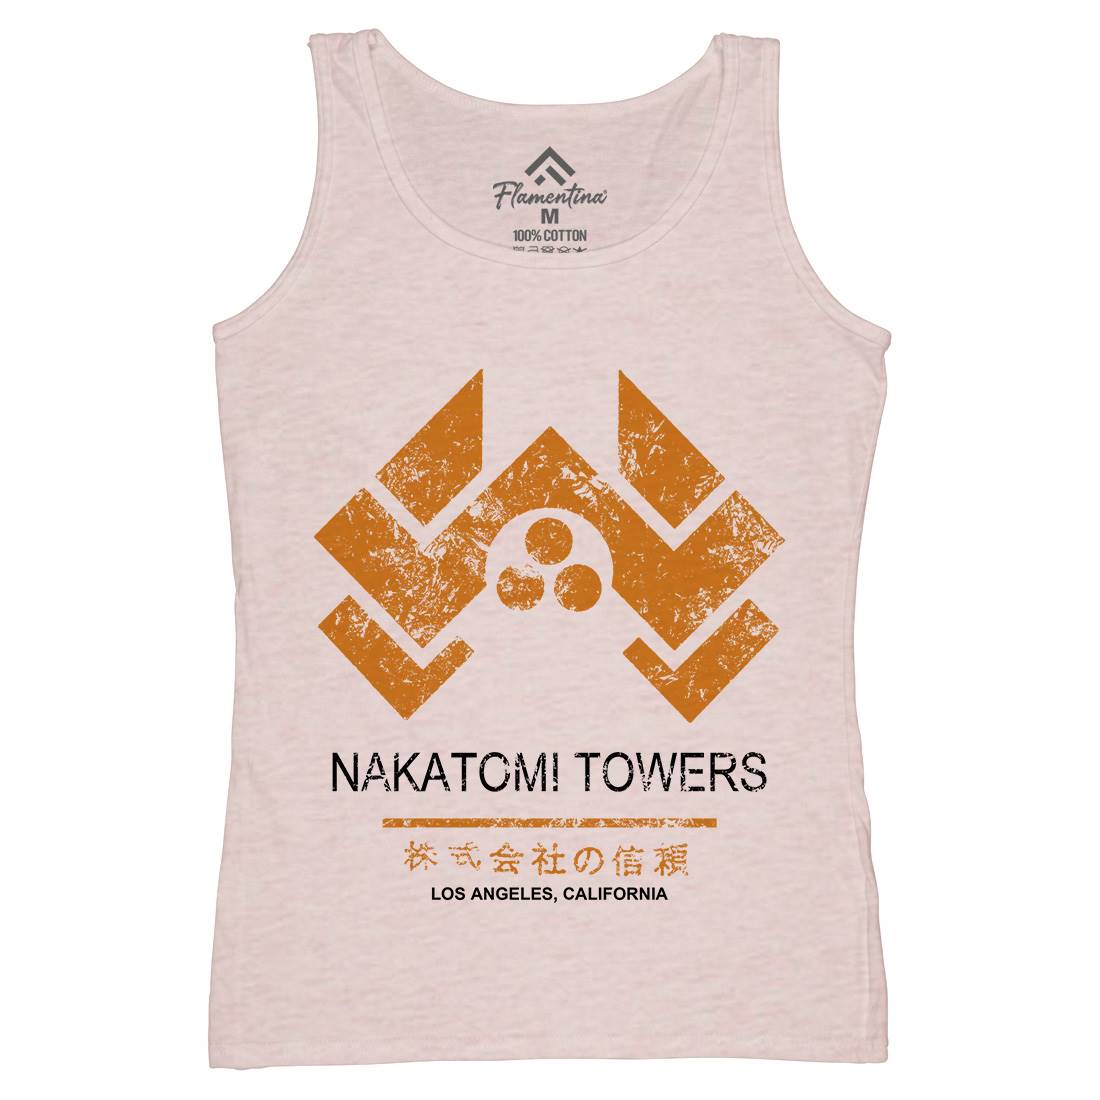 Nakatomi Tower Womens Organic Tank Top Vest Retro D430